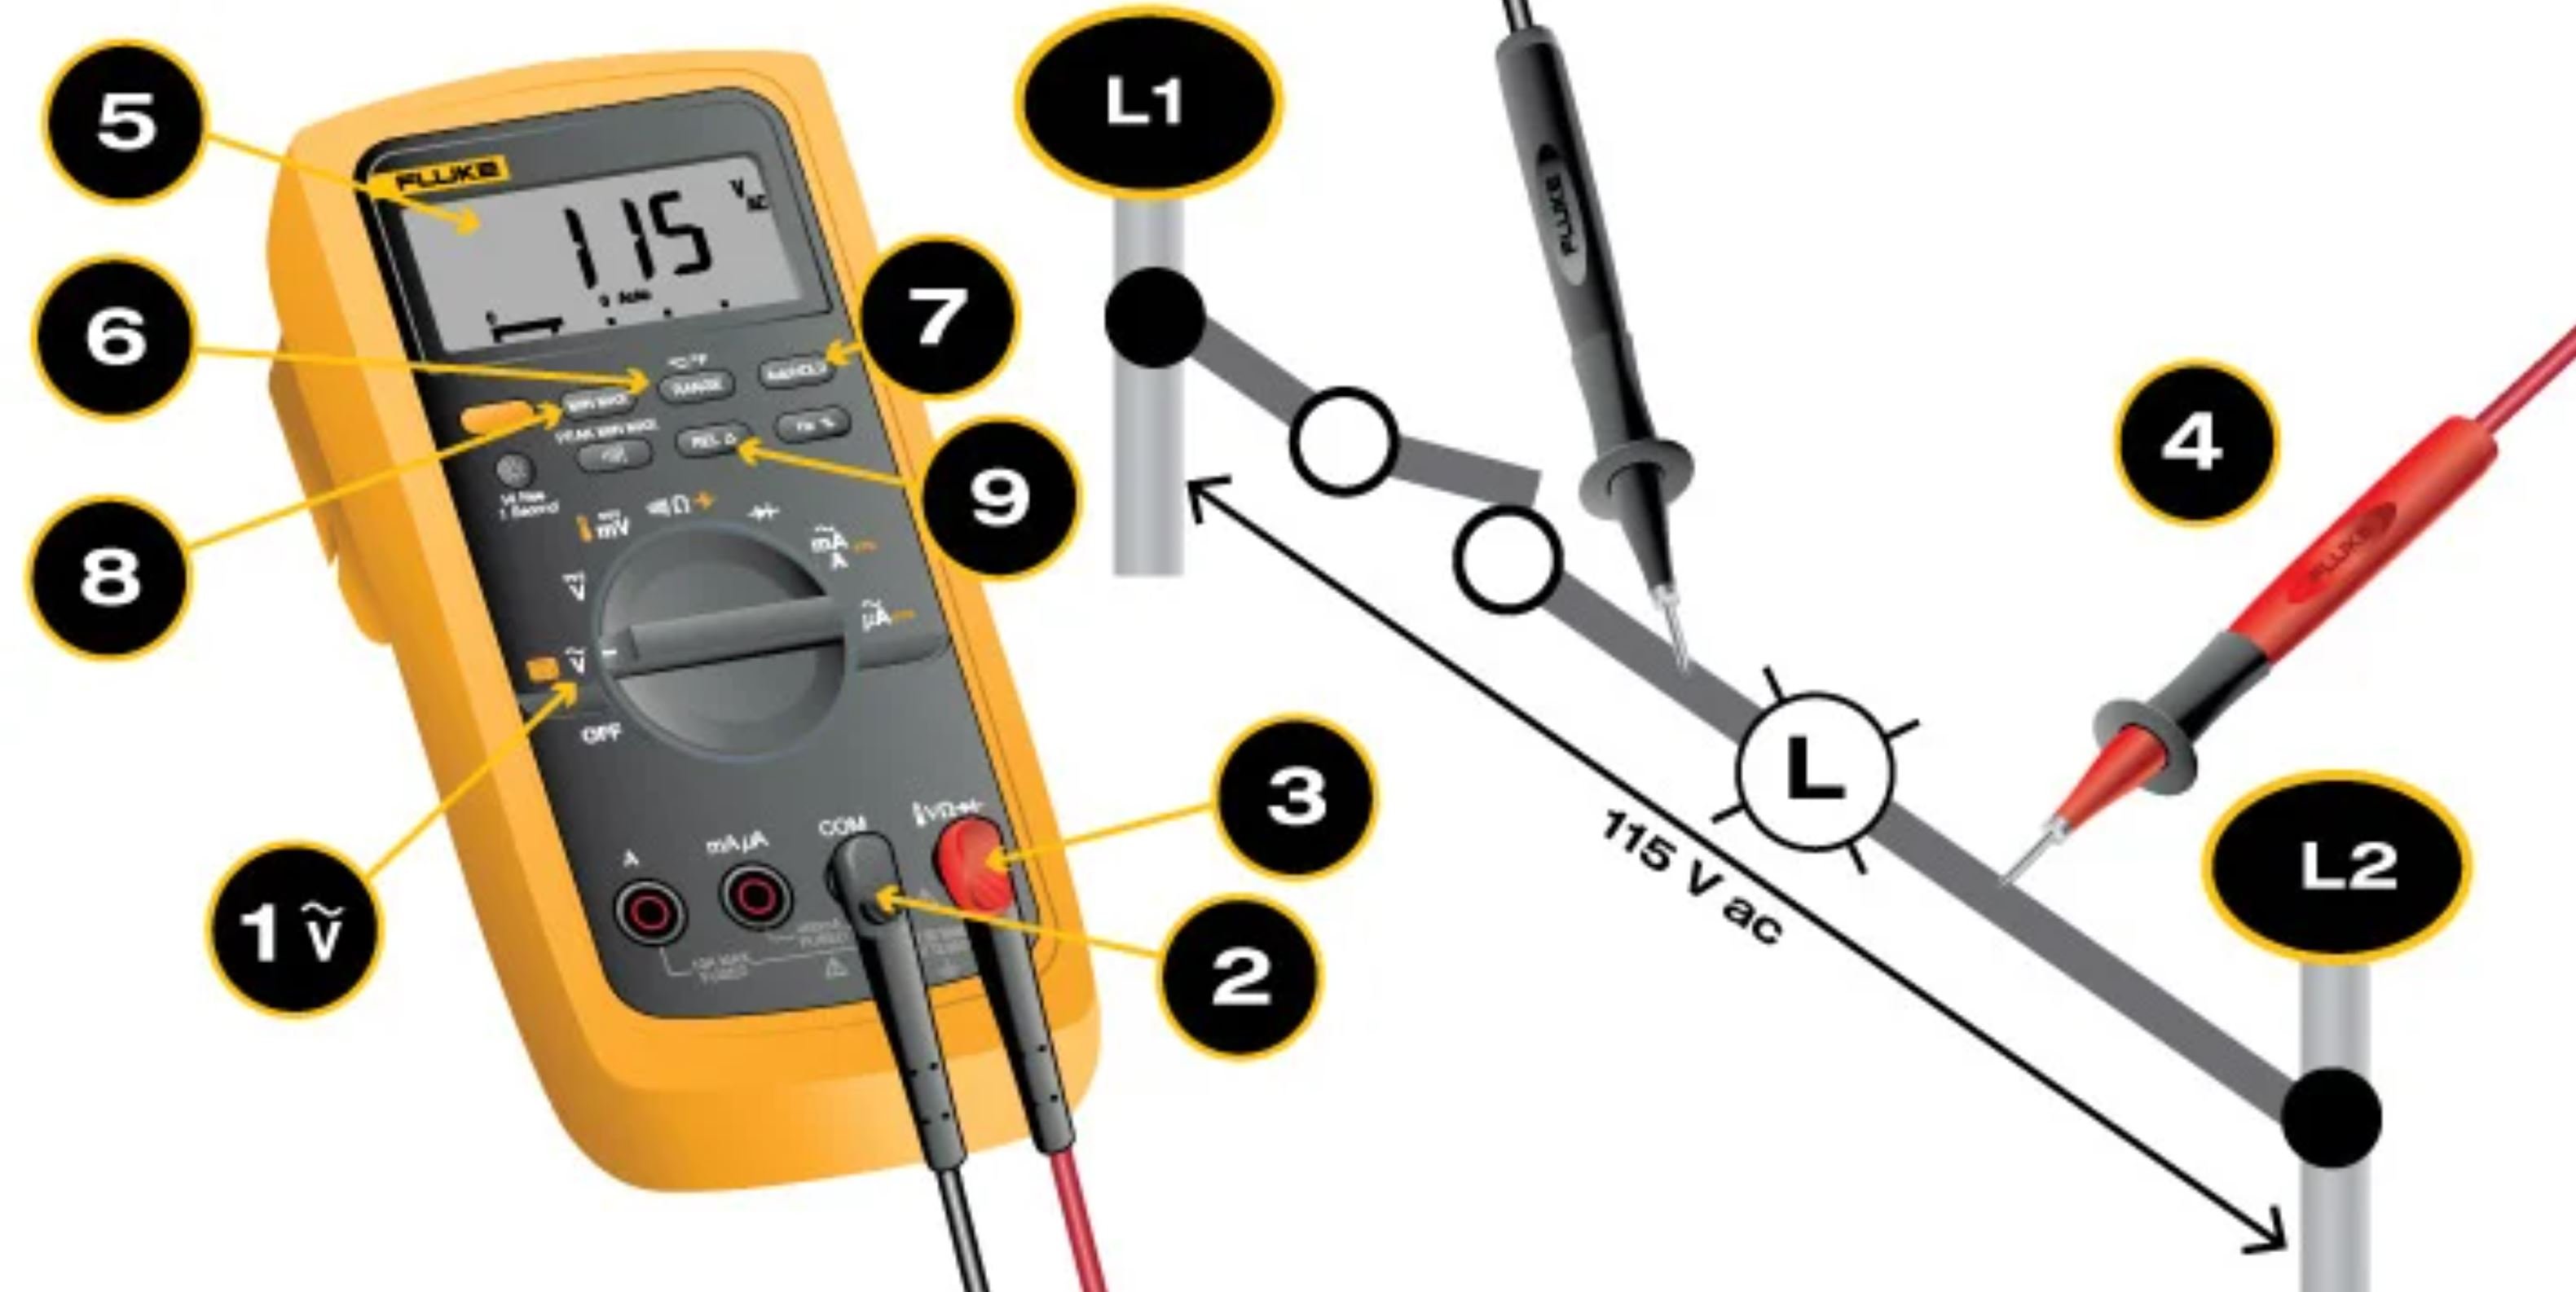 Steps for measuring AC voltage with a digital multimeter